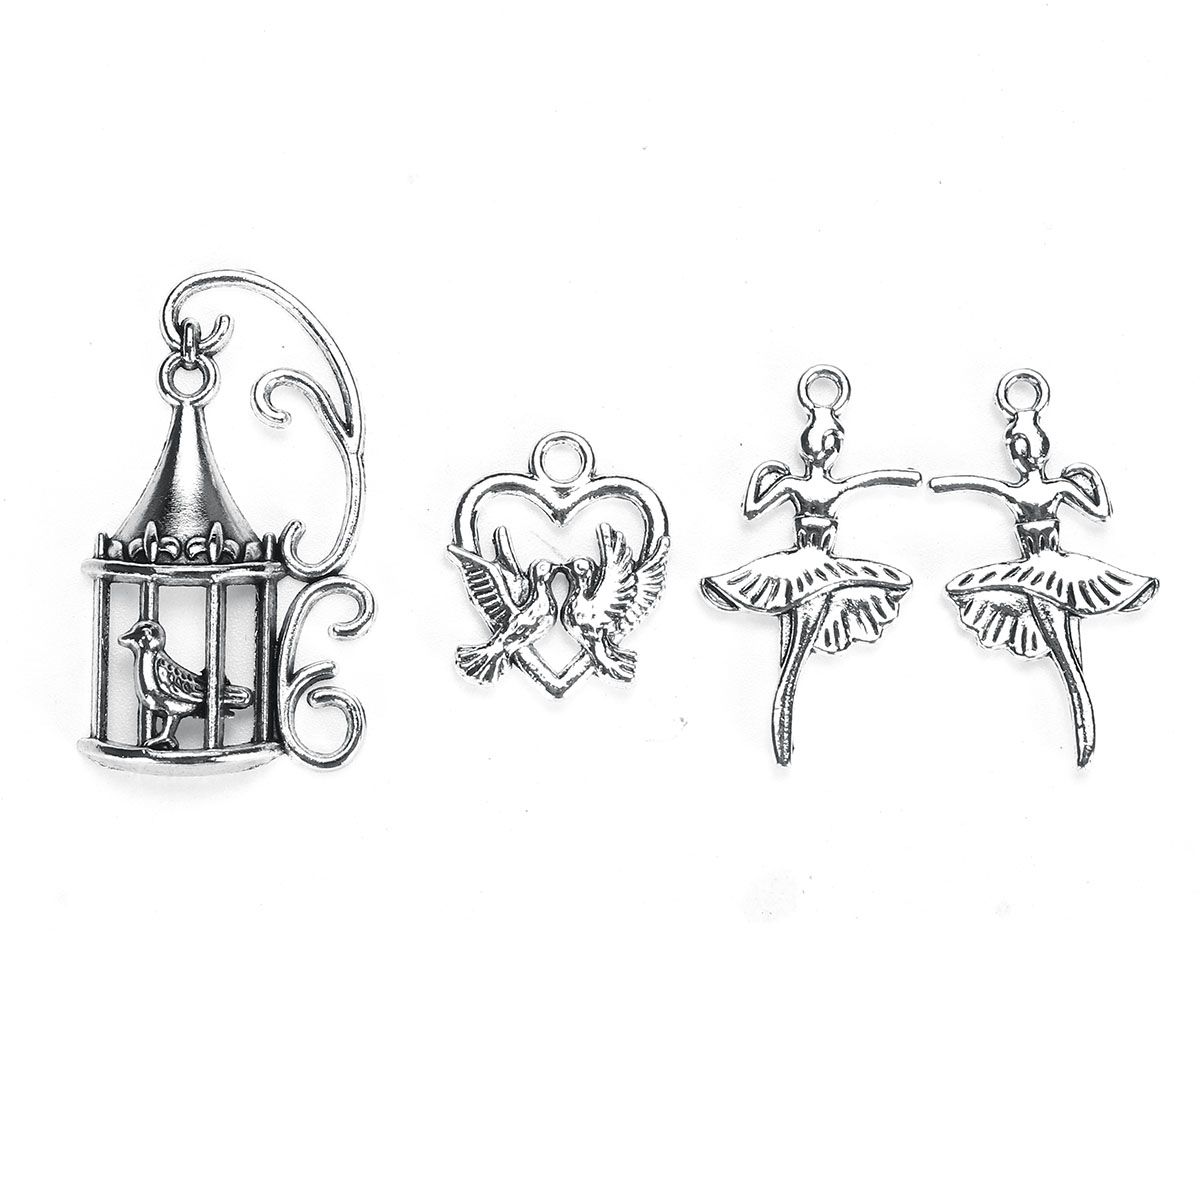 50gPack-Vintage-Pendant-DIY-Jewellery-Making-For-Necklace-Keychain-Handcraft-1708825